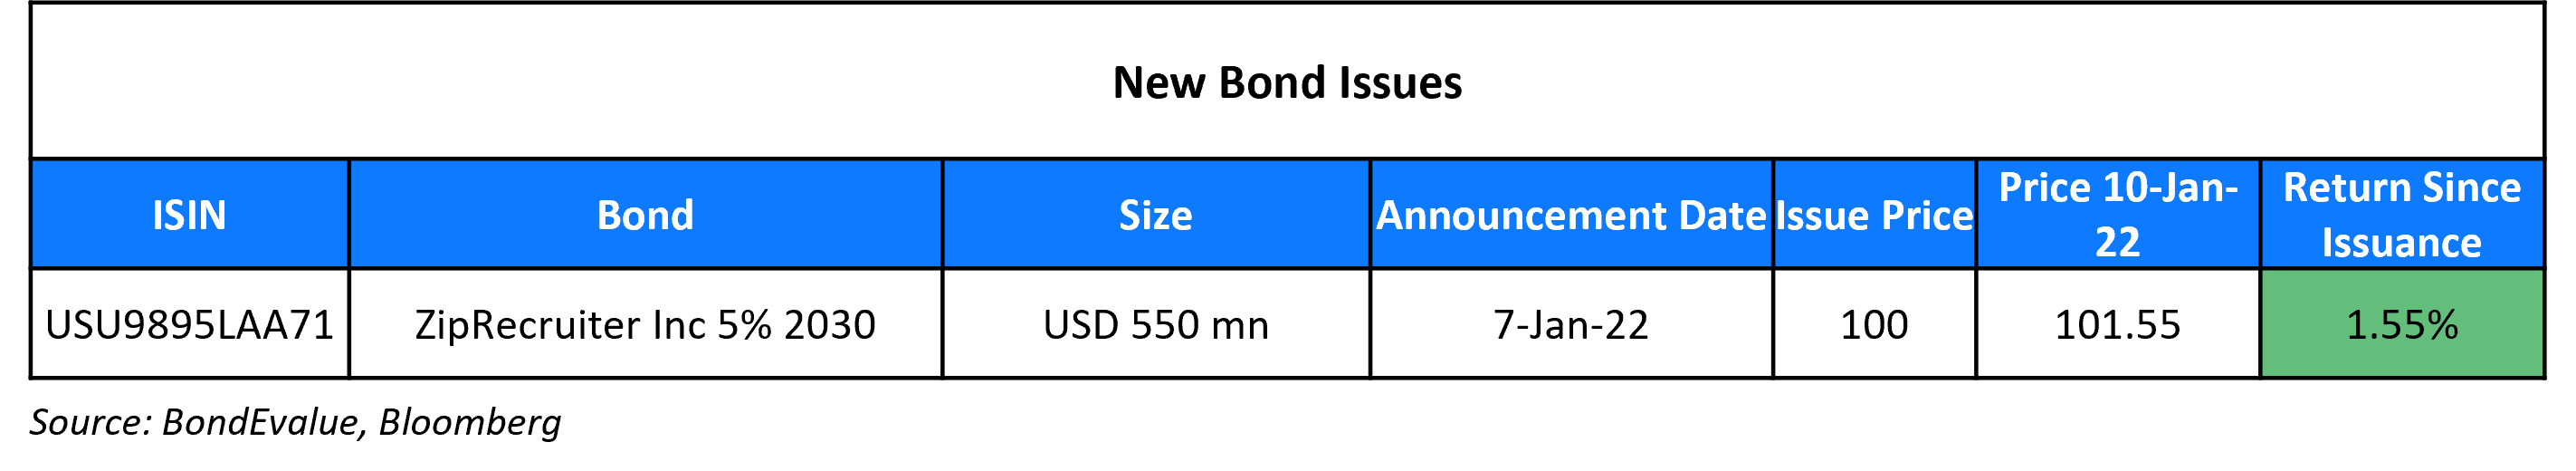 New Bond Issues 10 Jan